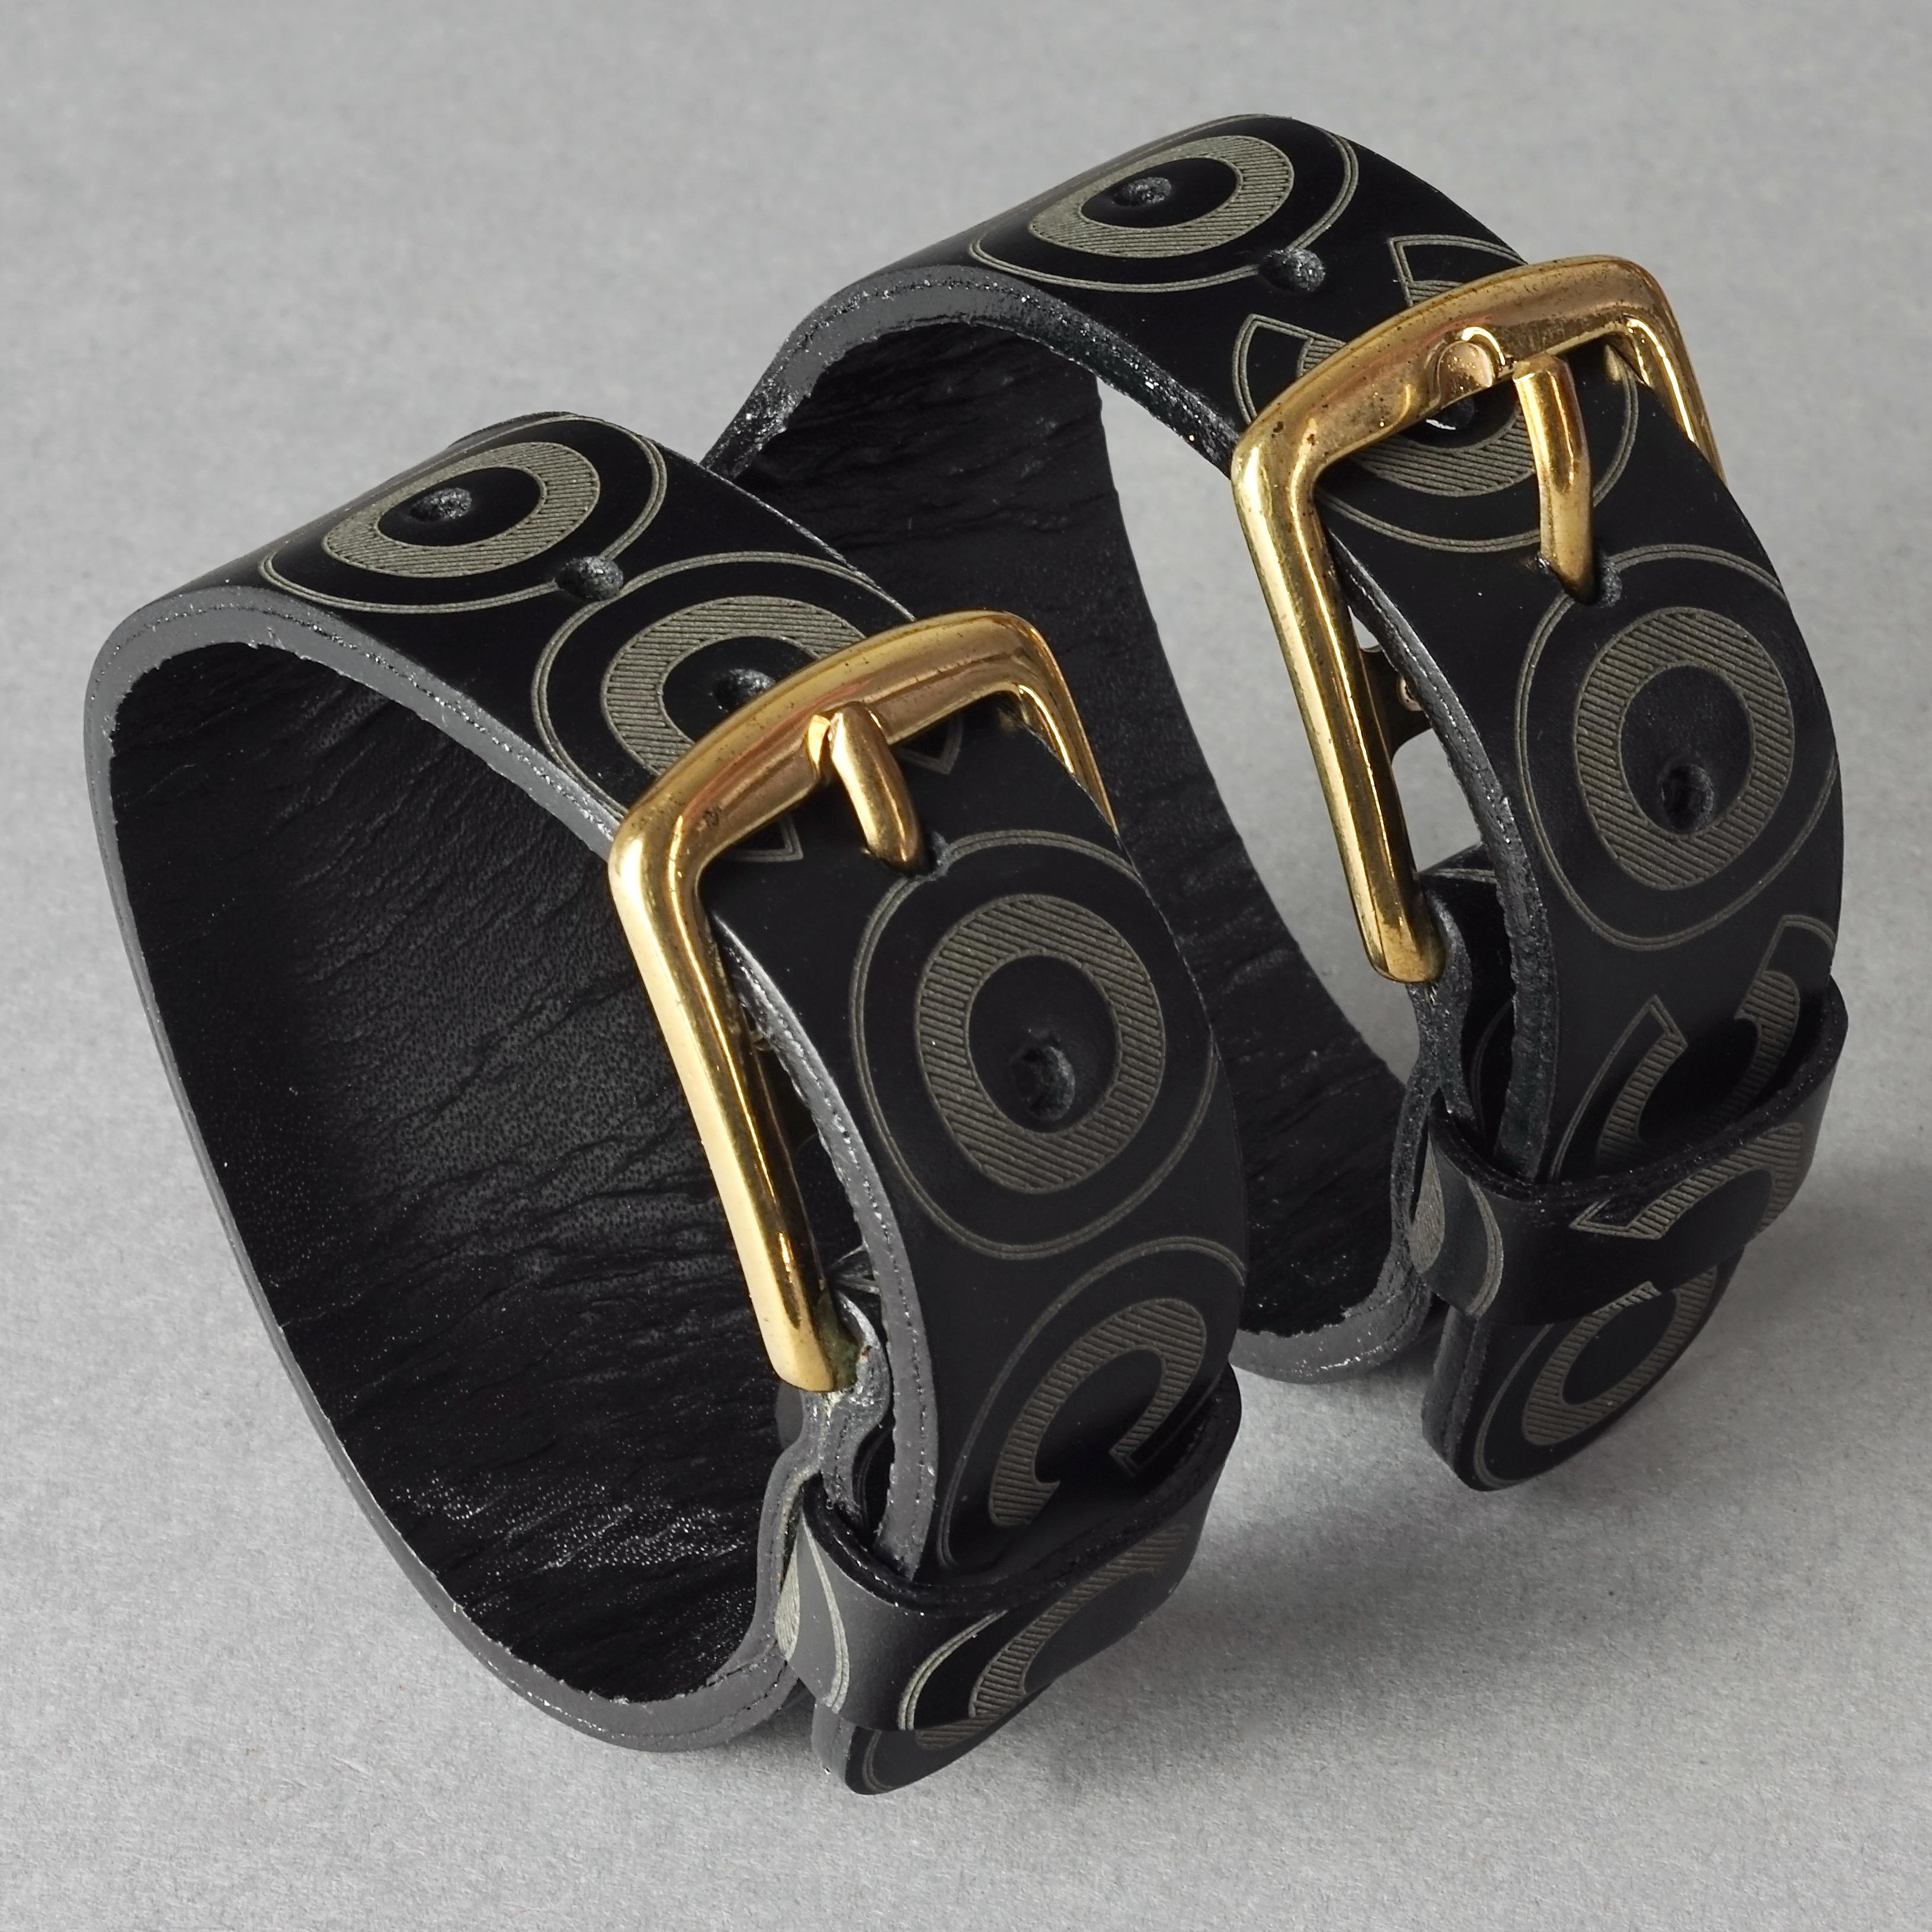 chanel leather cuff bracelet